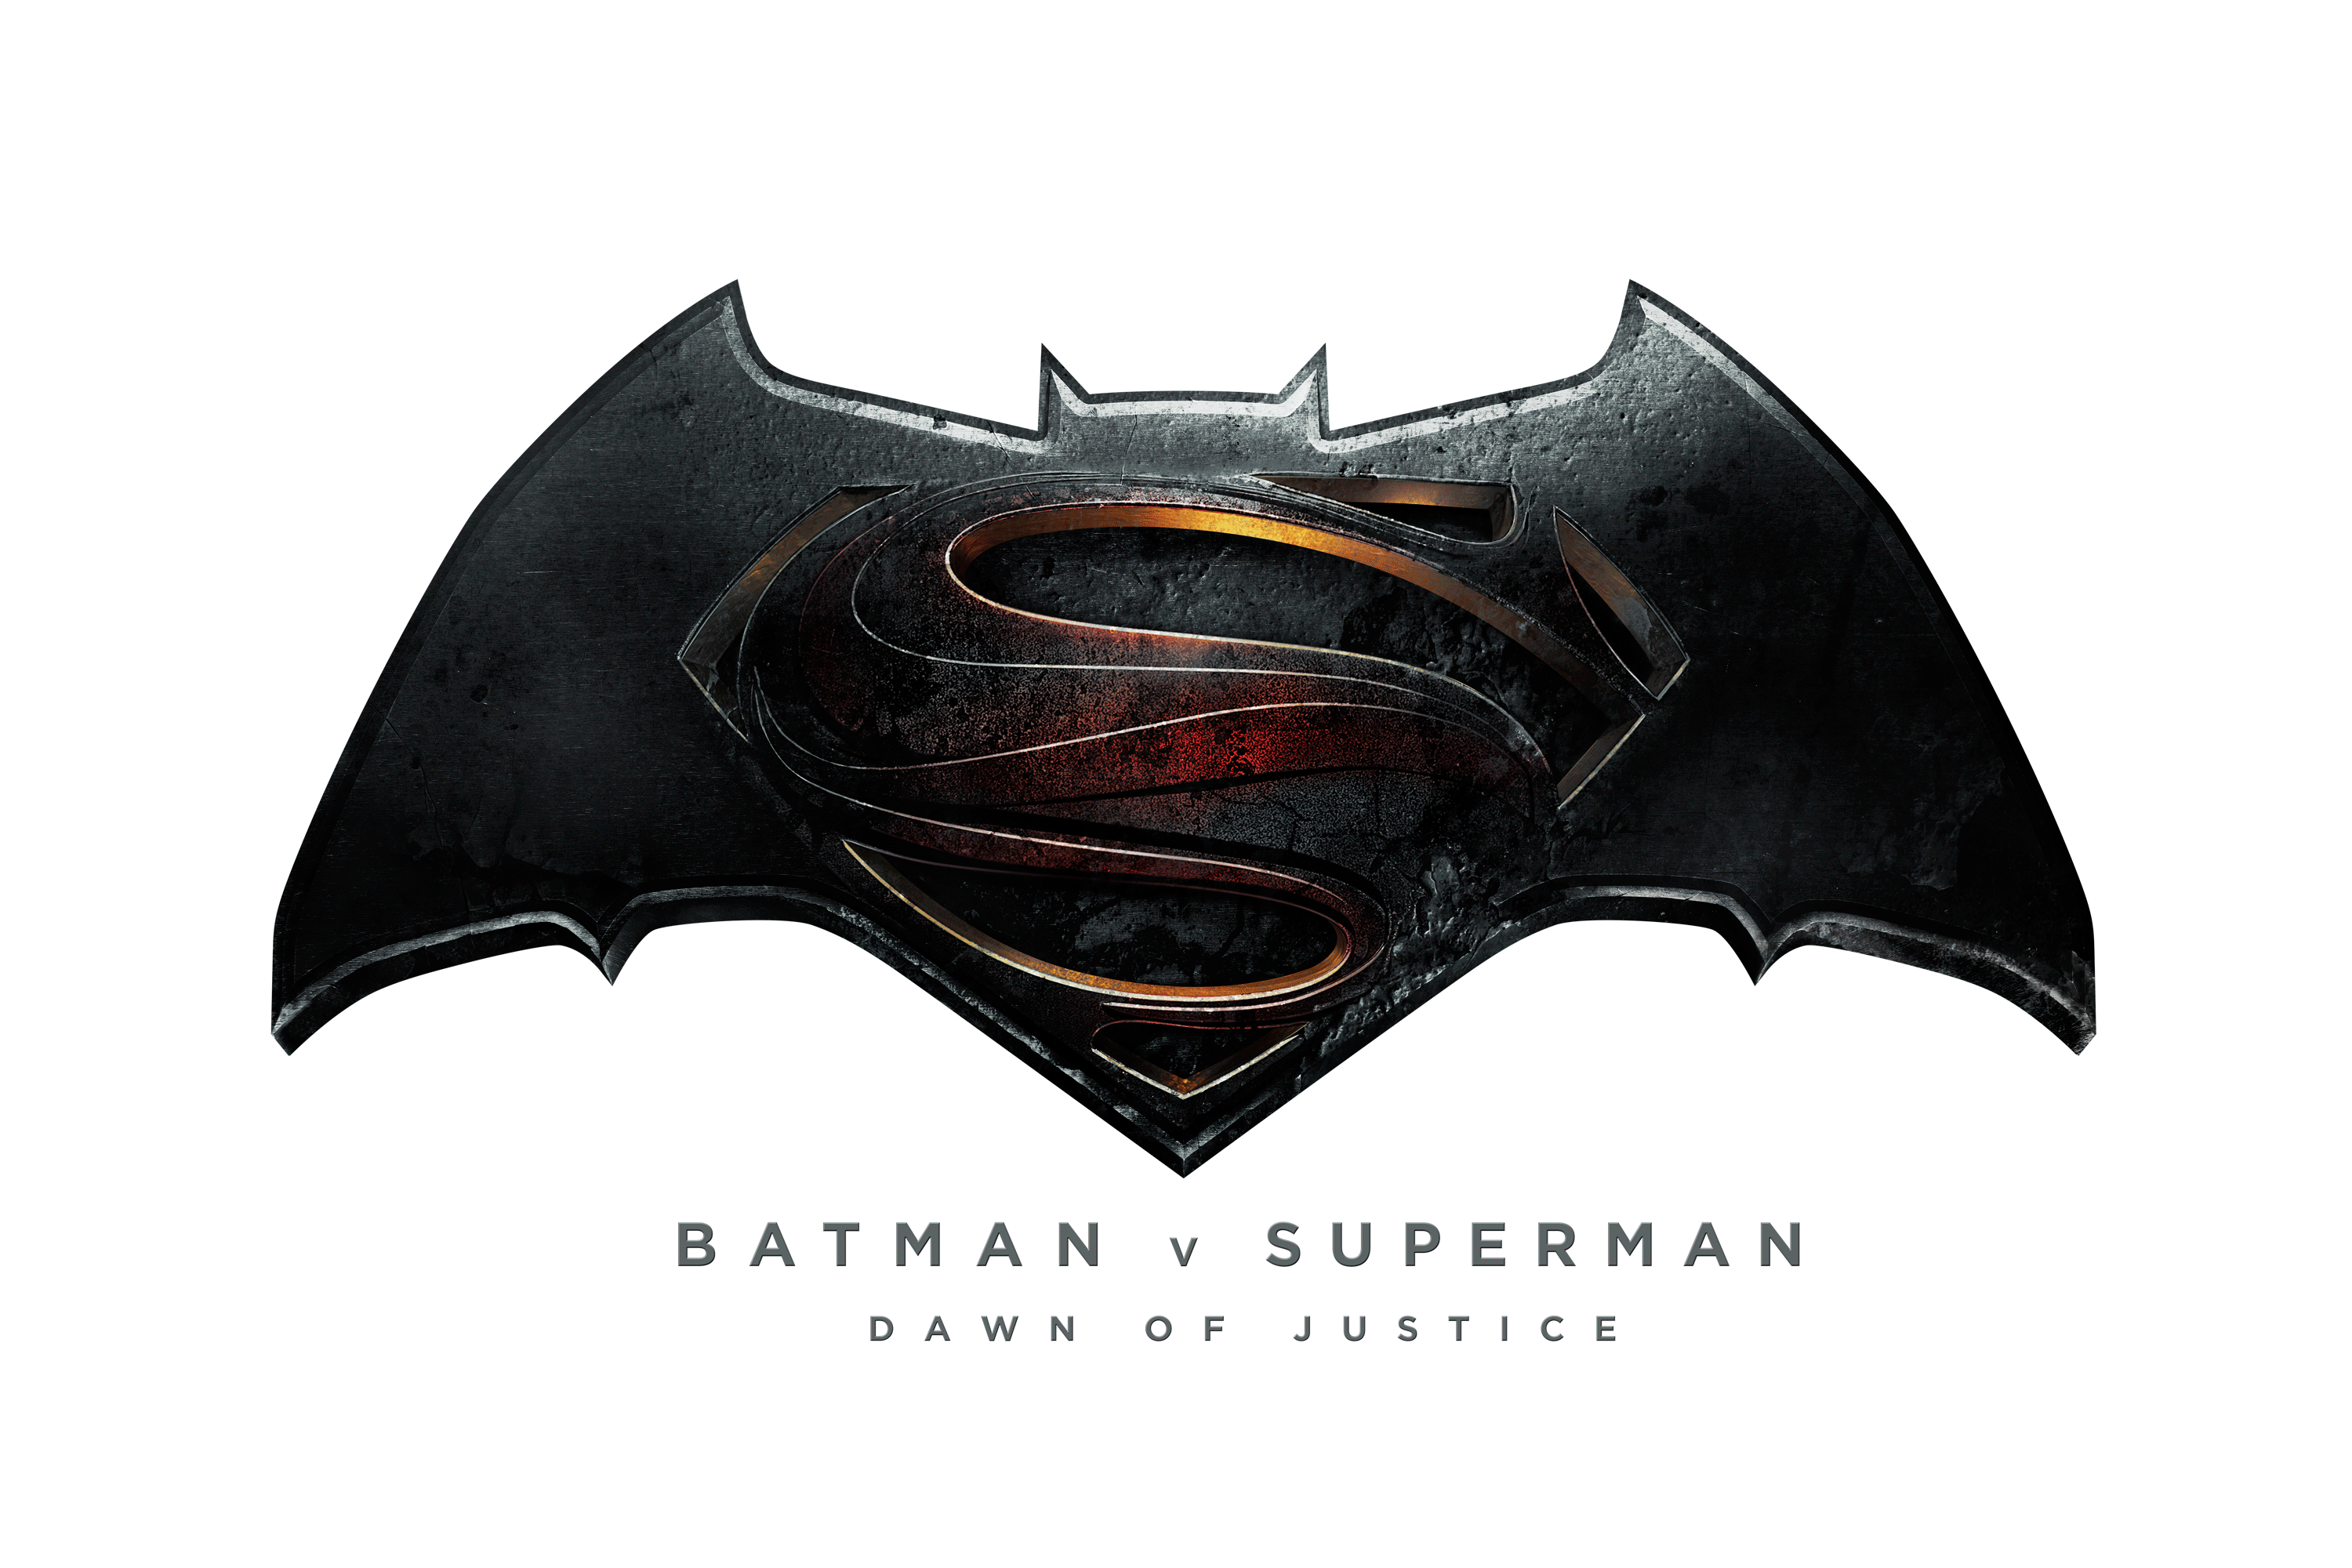 Download Batman Vs Superman Image HQ PNG Image | FreePNGImg